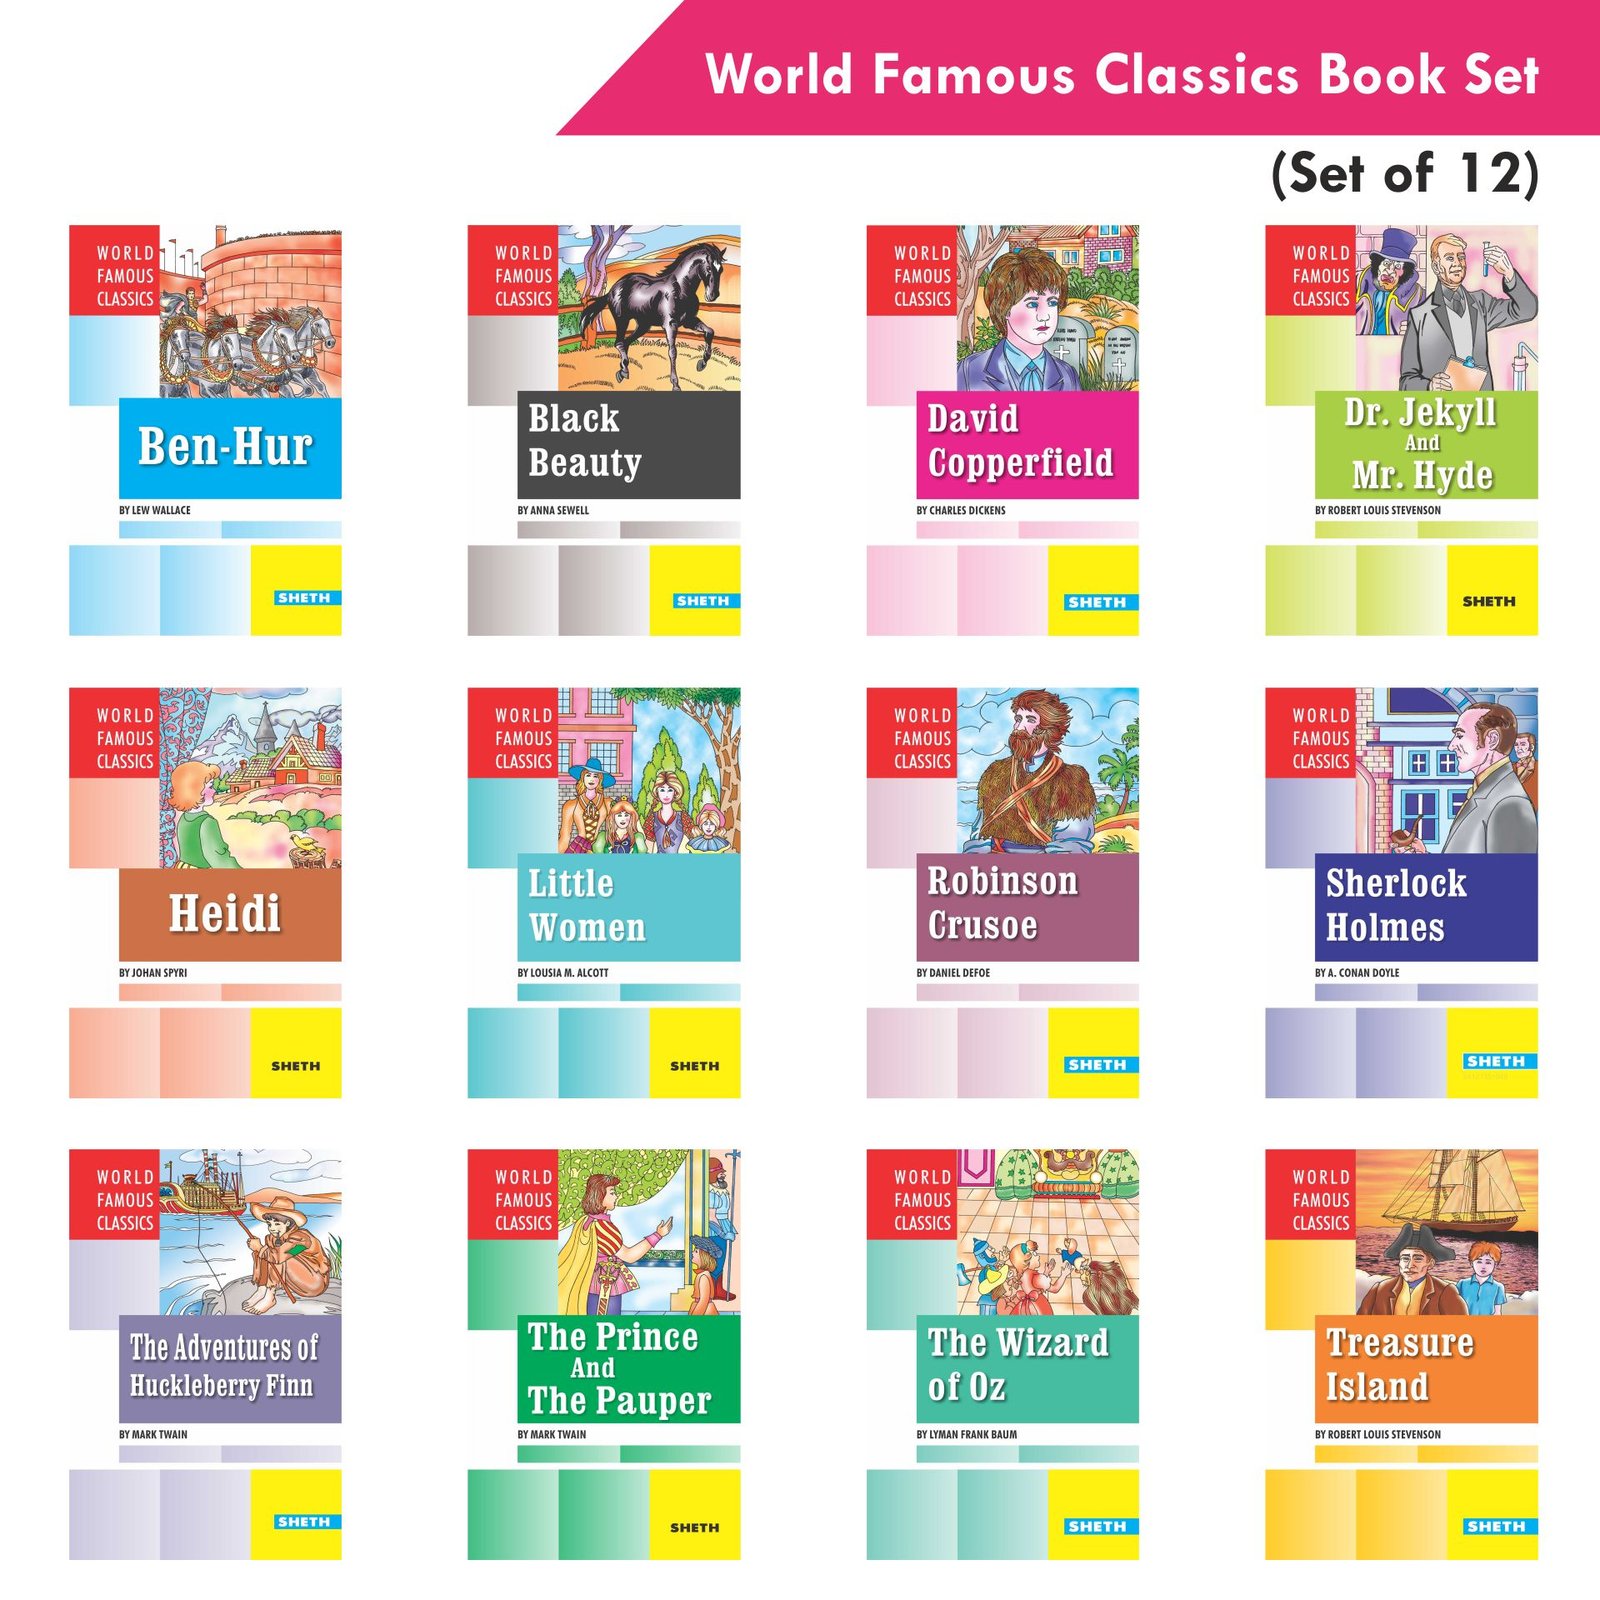 Sheth Books World Famous Classics Book Set Set of 12 1